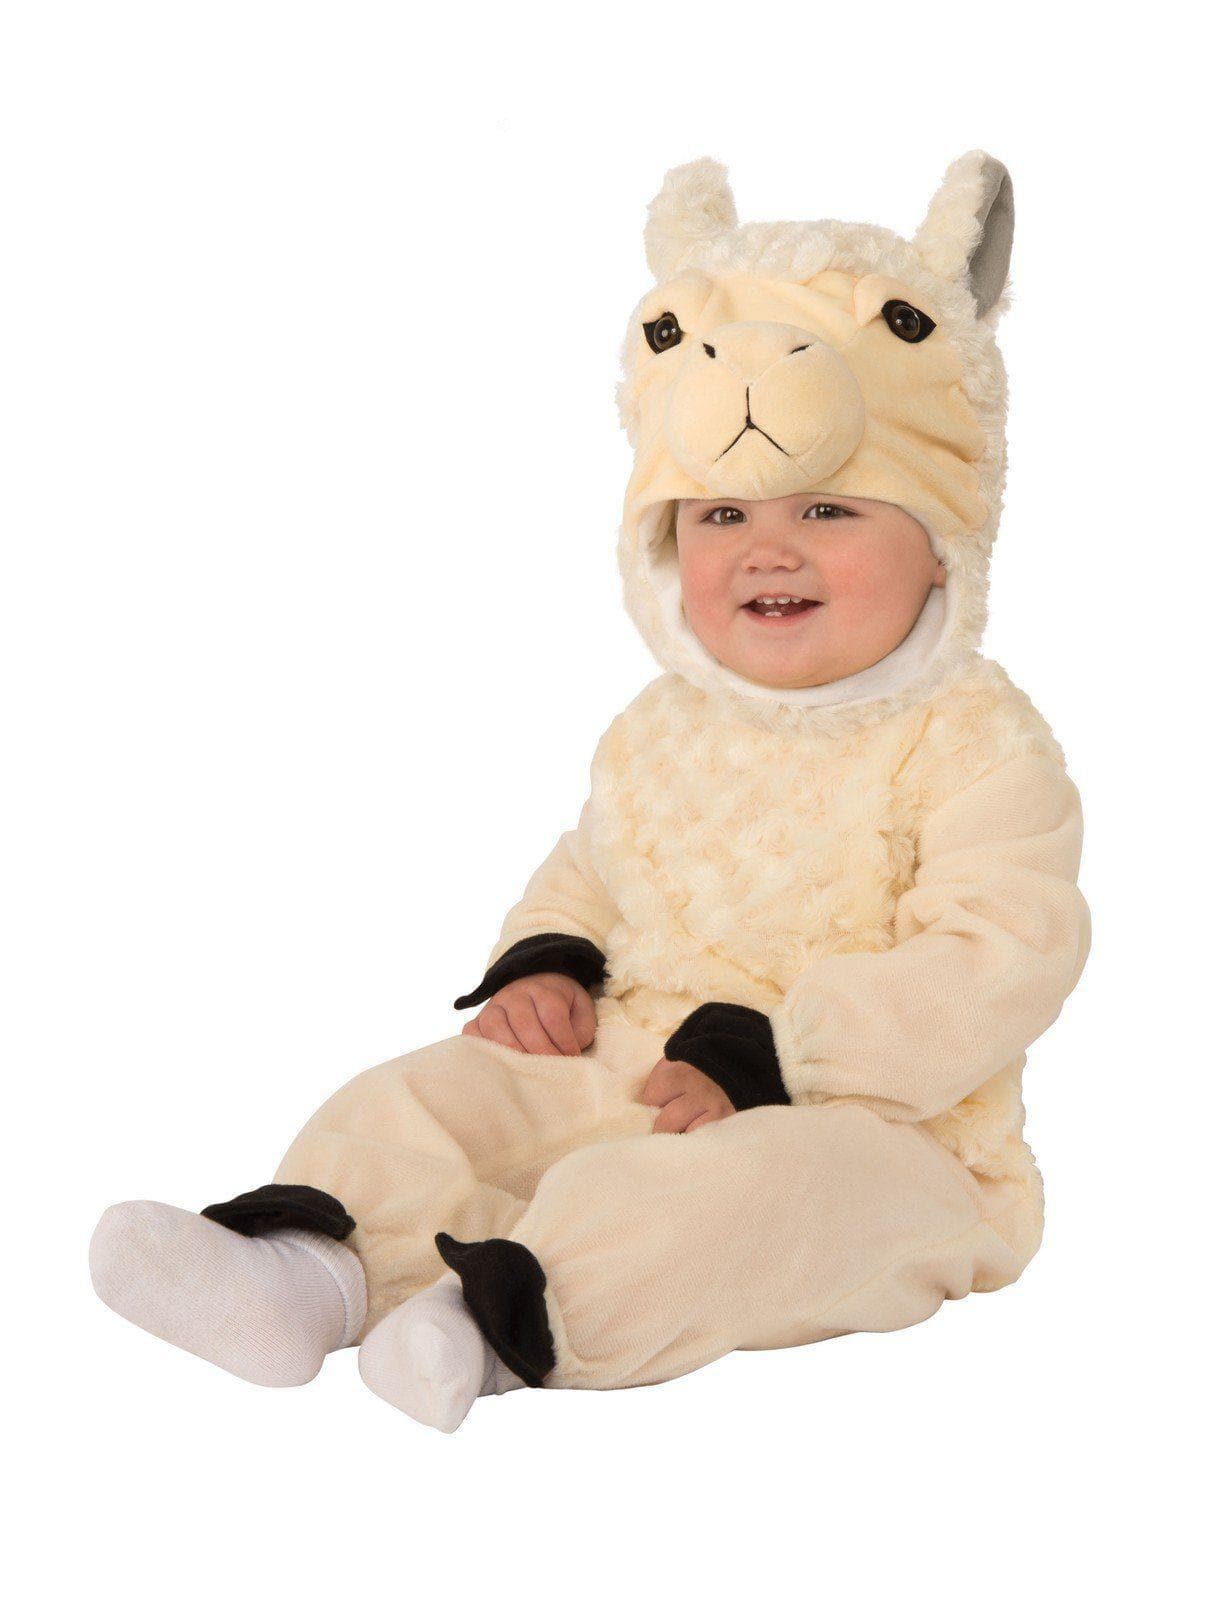 Baby/Toddler Llama Costume - costumes.com